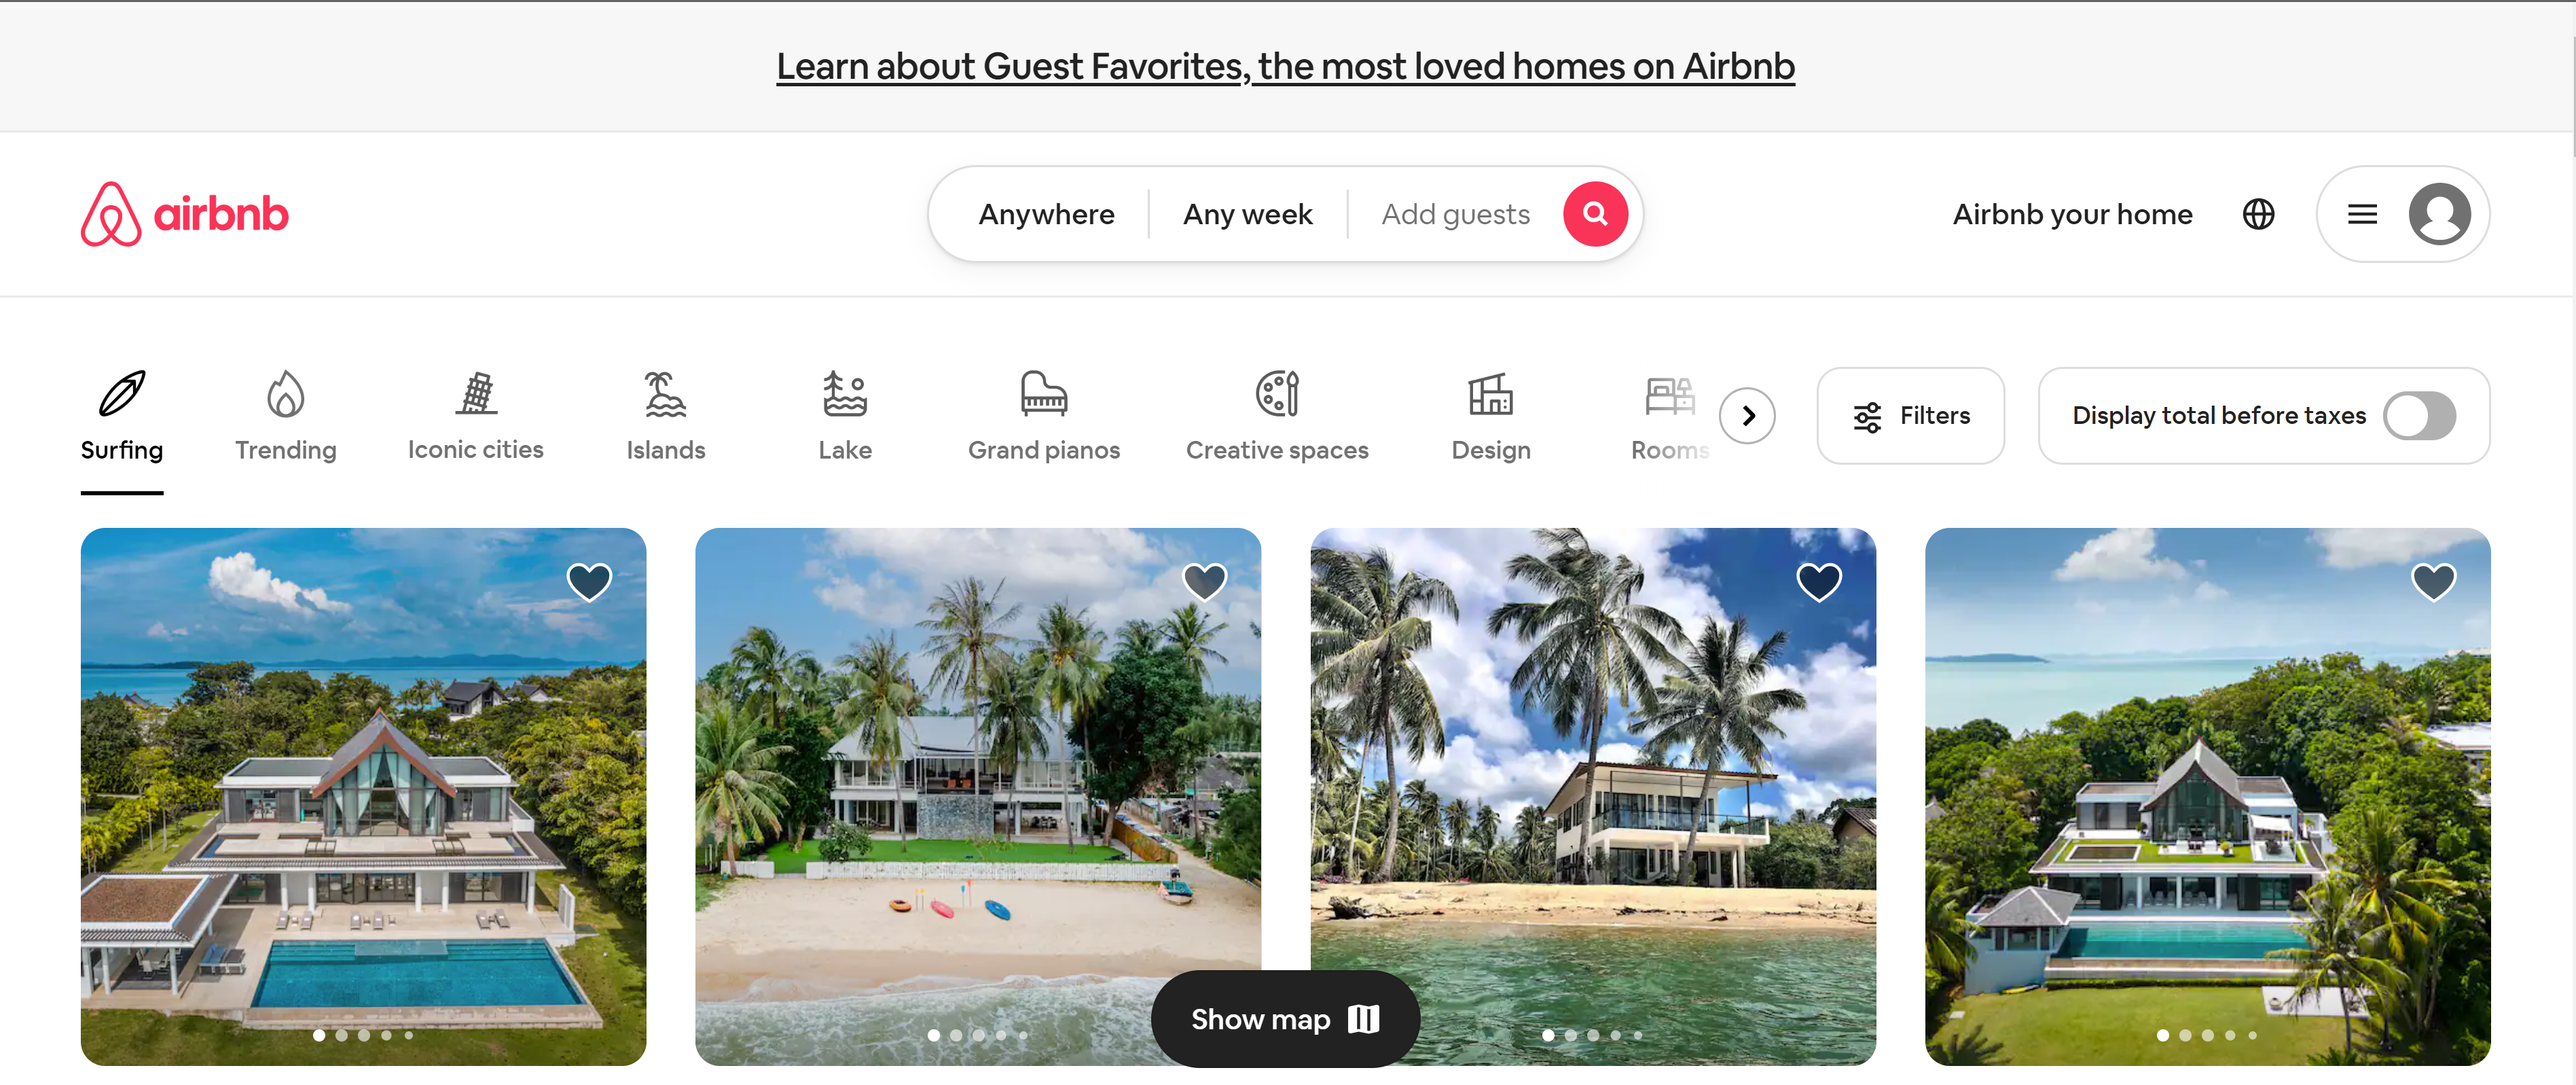 Airbnb vs. Vrbo: Comparing the Largest Short-Term Rental Platforms